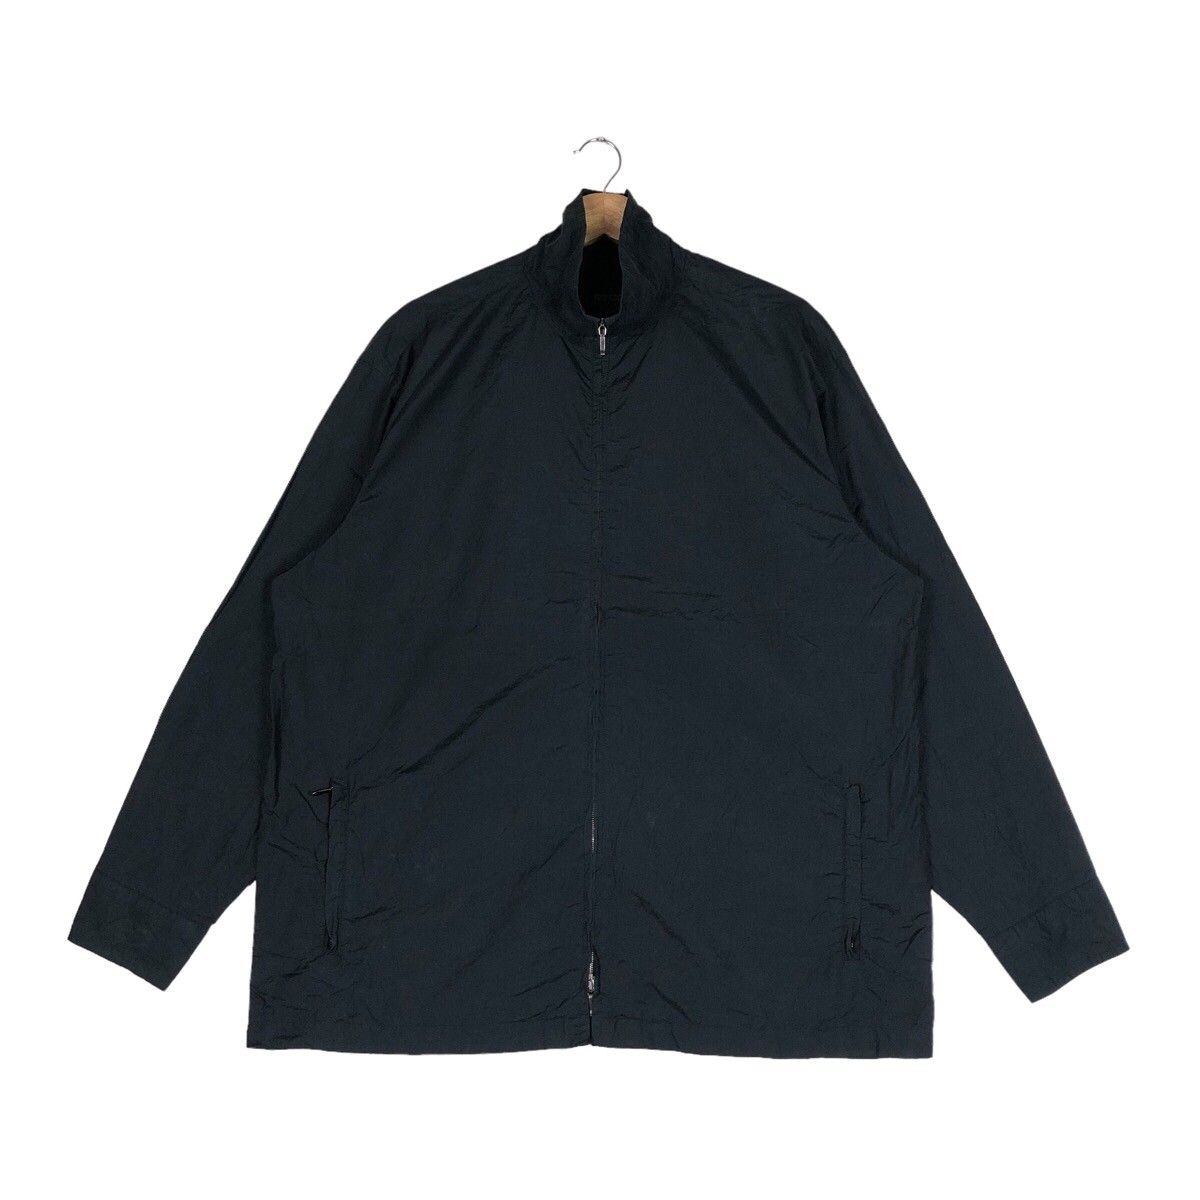 Kenzo Vintage Kenzo Sweater Windbreaker All Black Rare Size US XL / EU 56 / 4 - 1 Preview